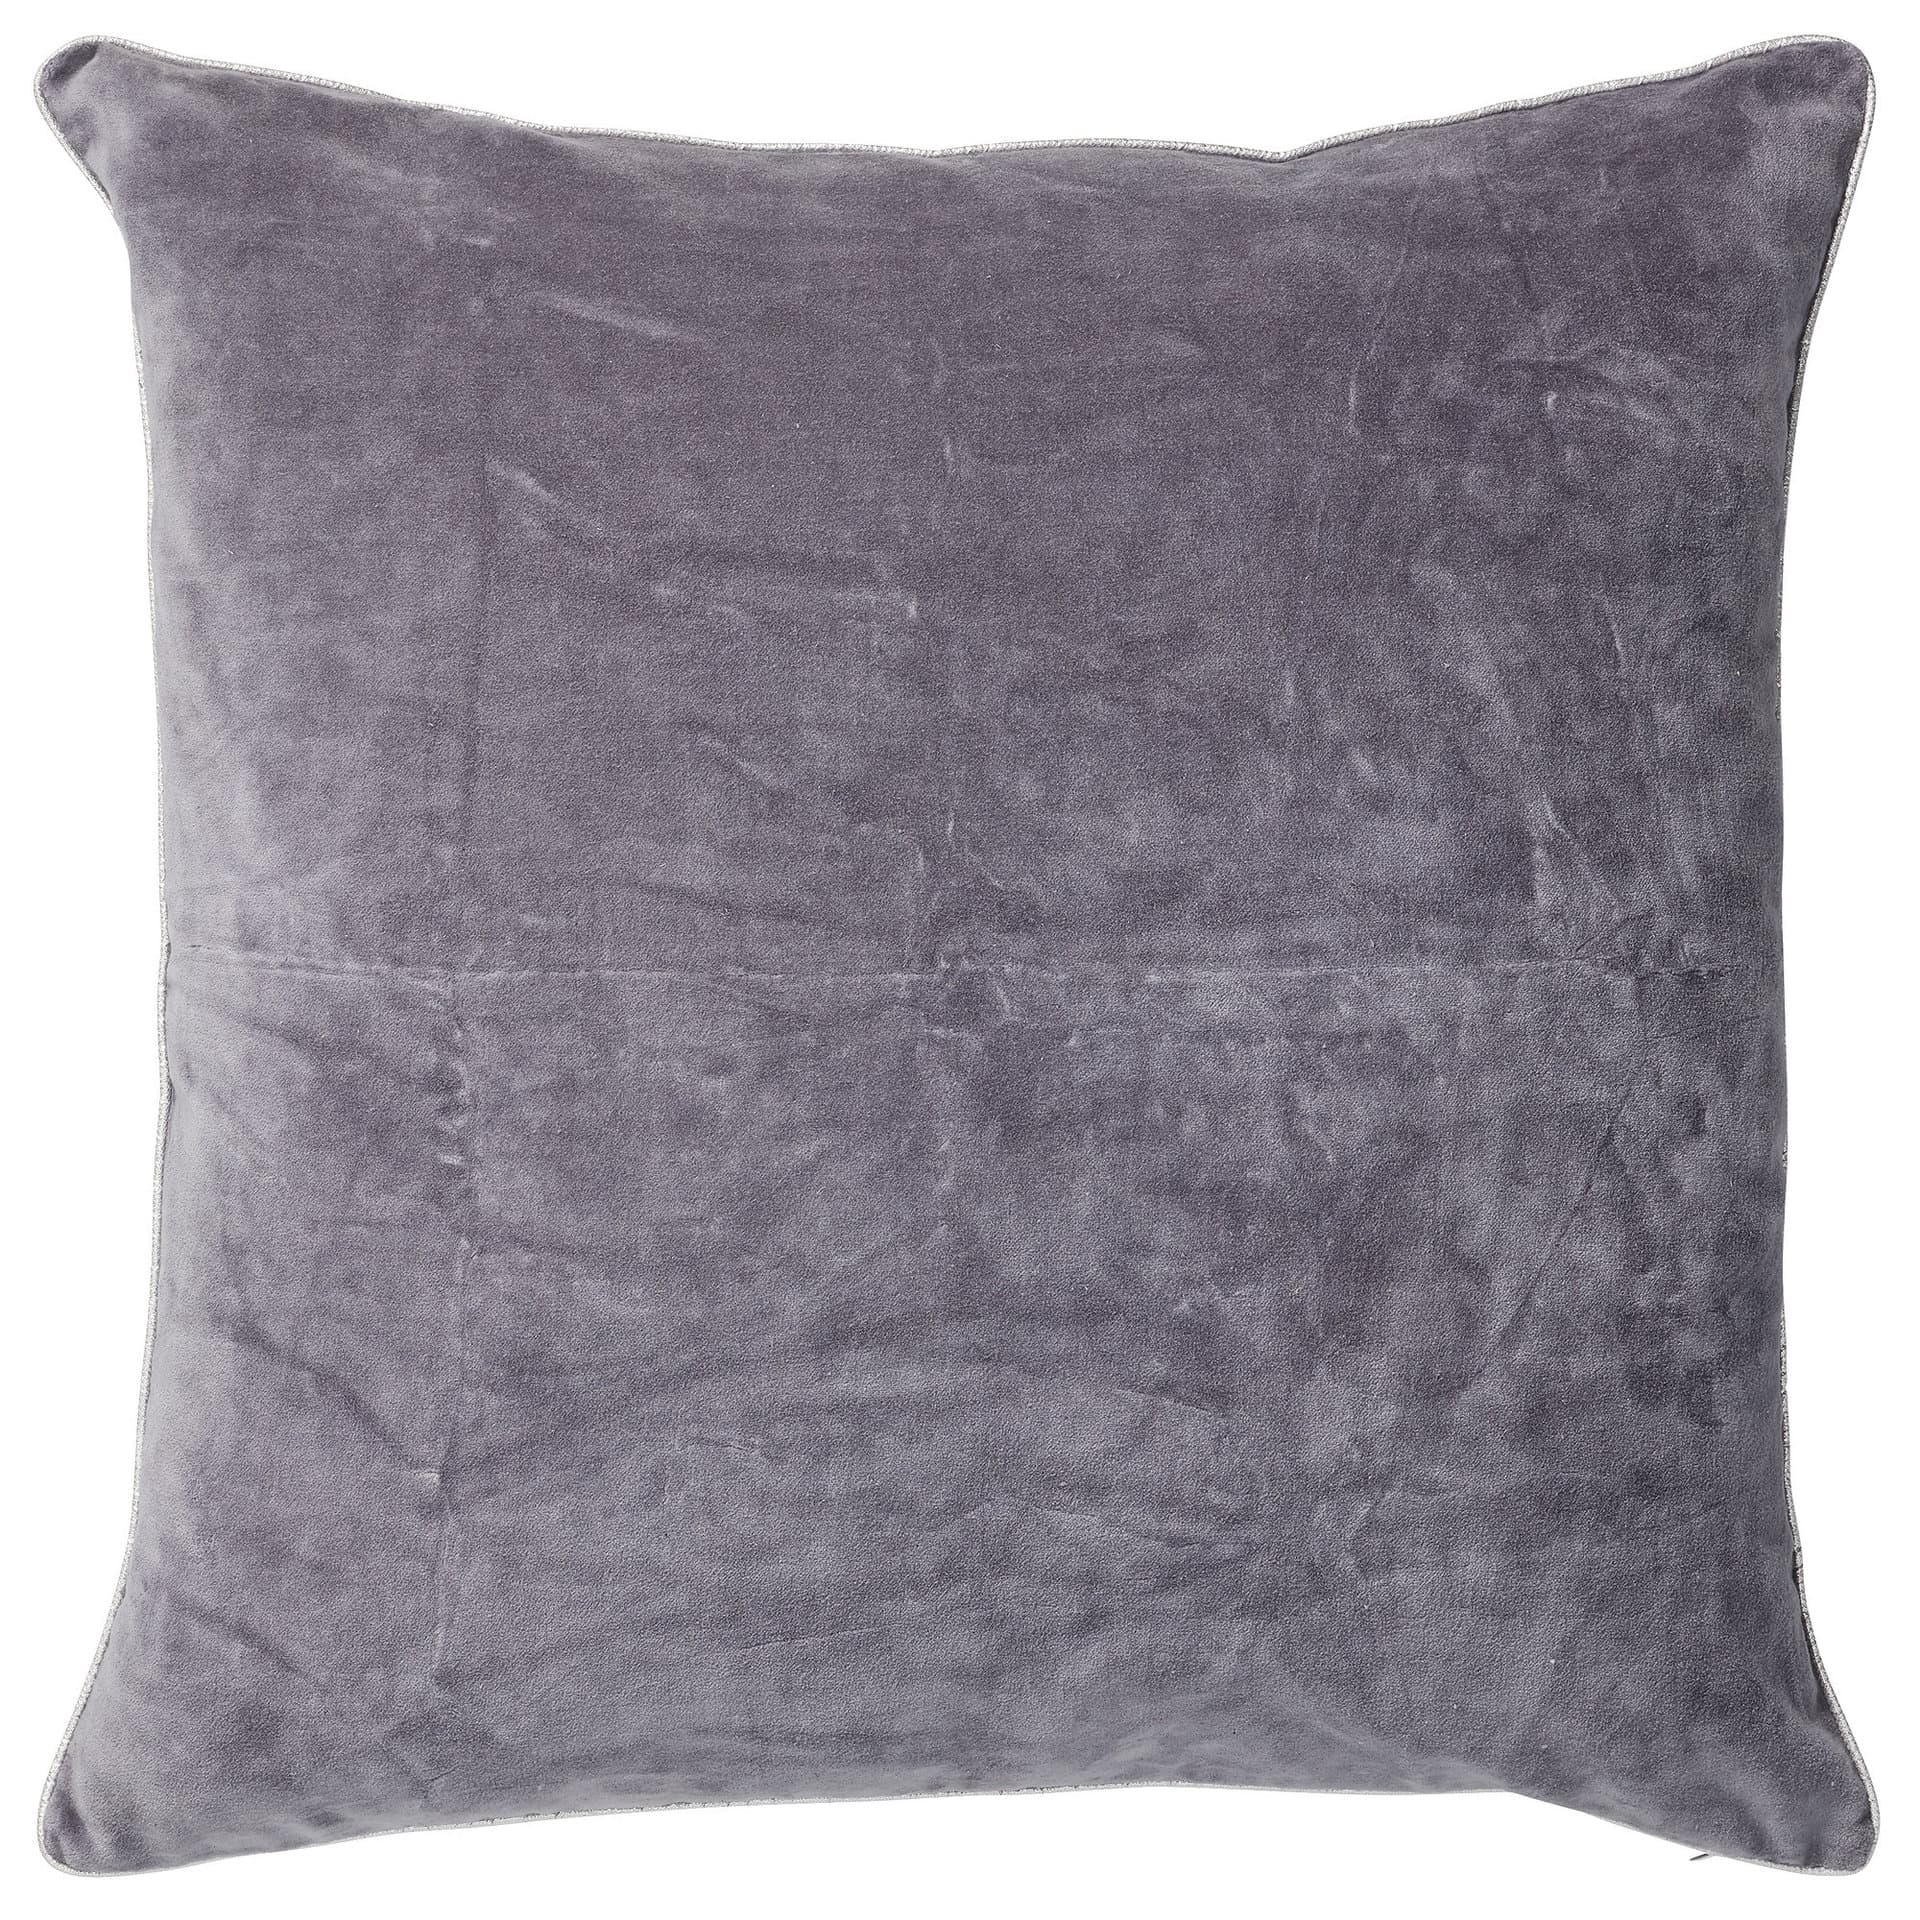 Ediana cushion 60x60 cm.